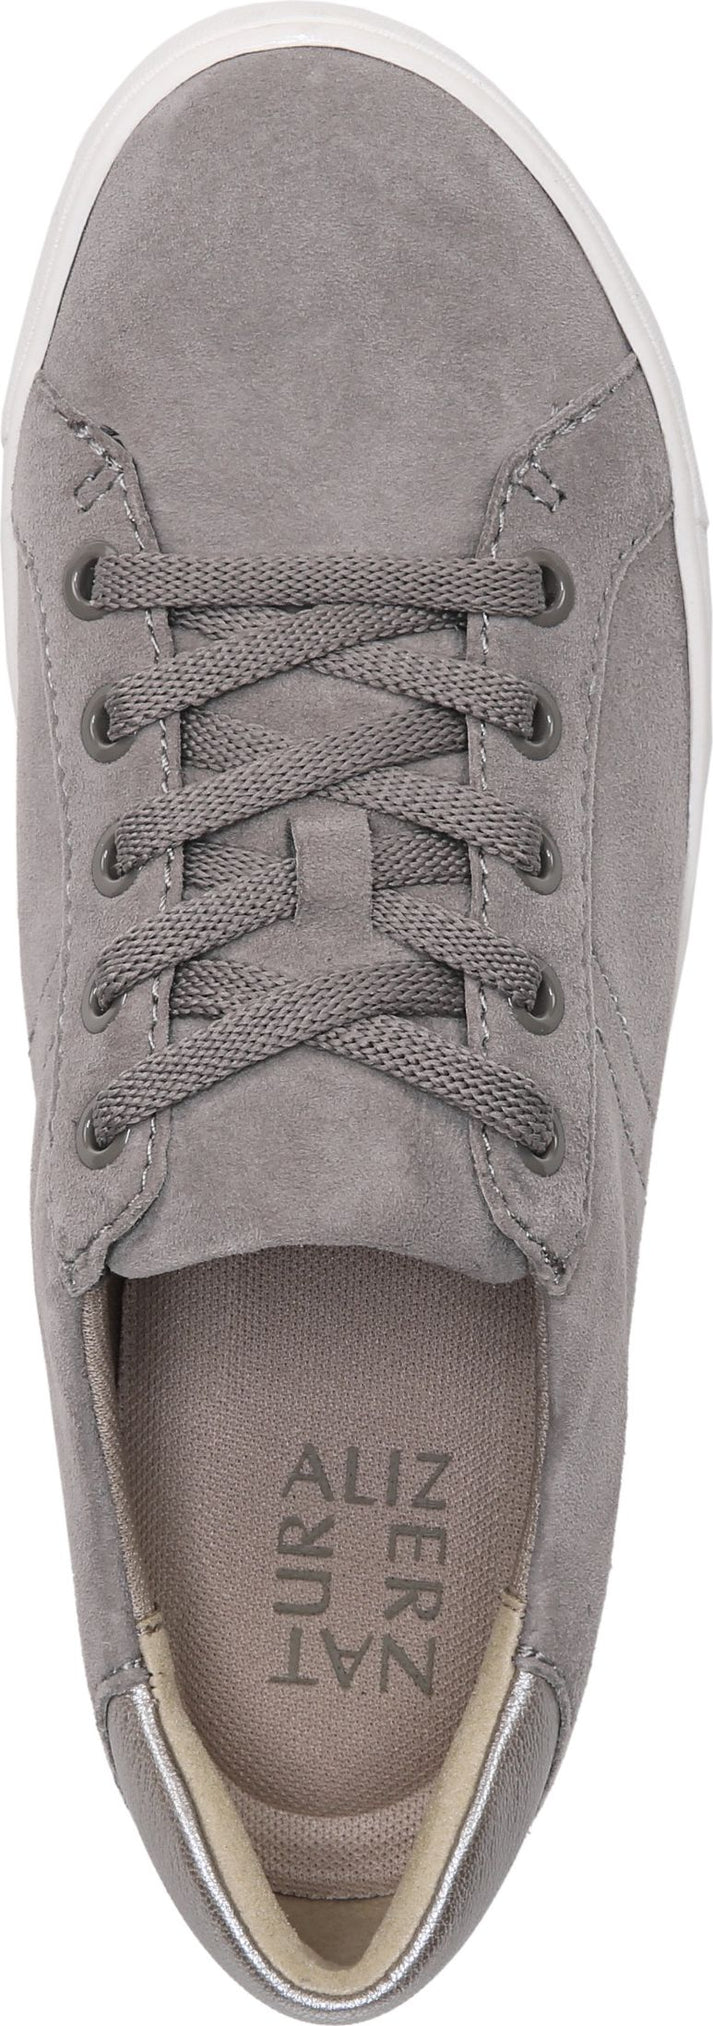 Naturalizer Shoes Morrison Grey Suede - Wide